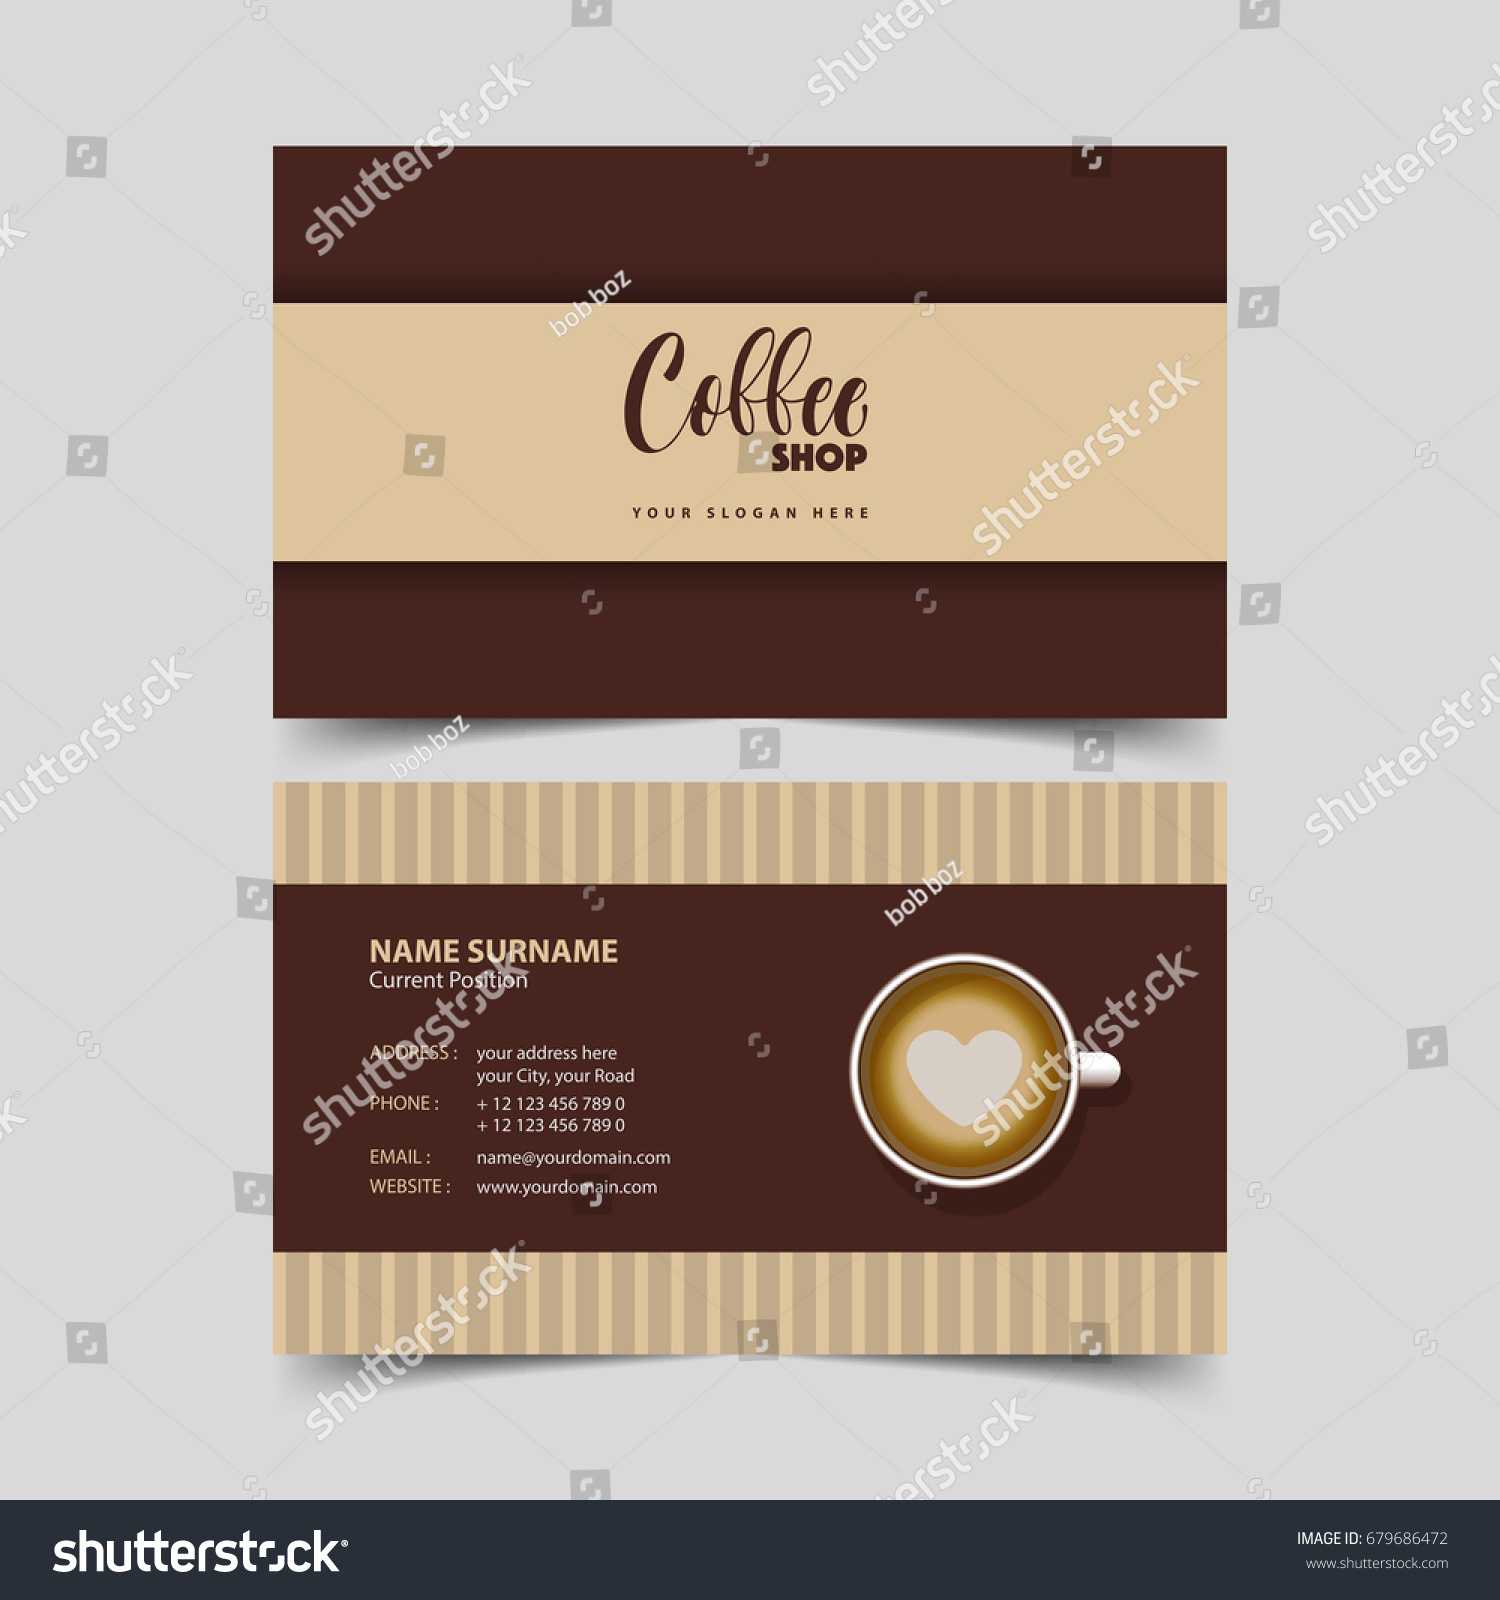 Coffee Shop Business Card Design Template Stock Vector With Coffee Business Card Template Free